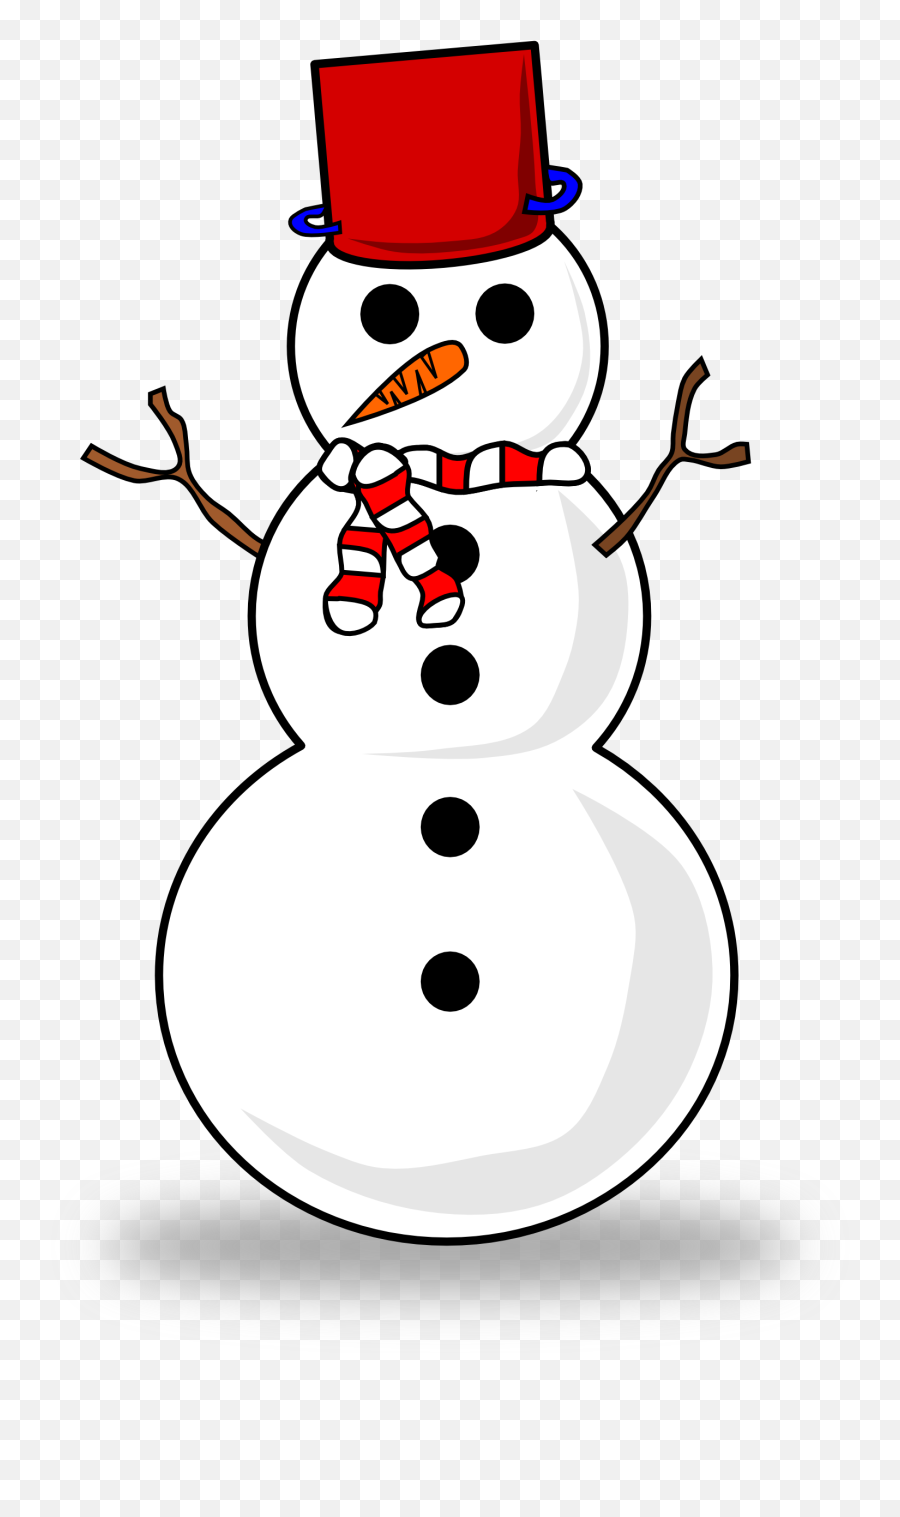 Snowman Face Clipart - Snowman With No Background Emoji,Snowman Face Clipart